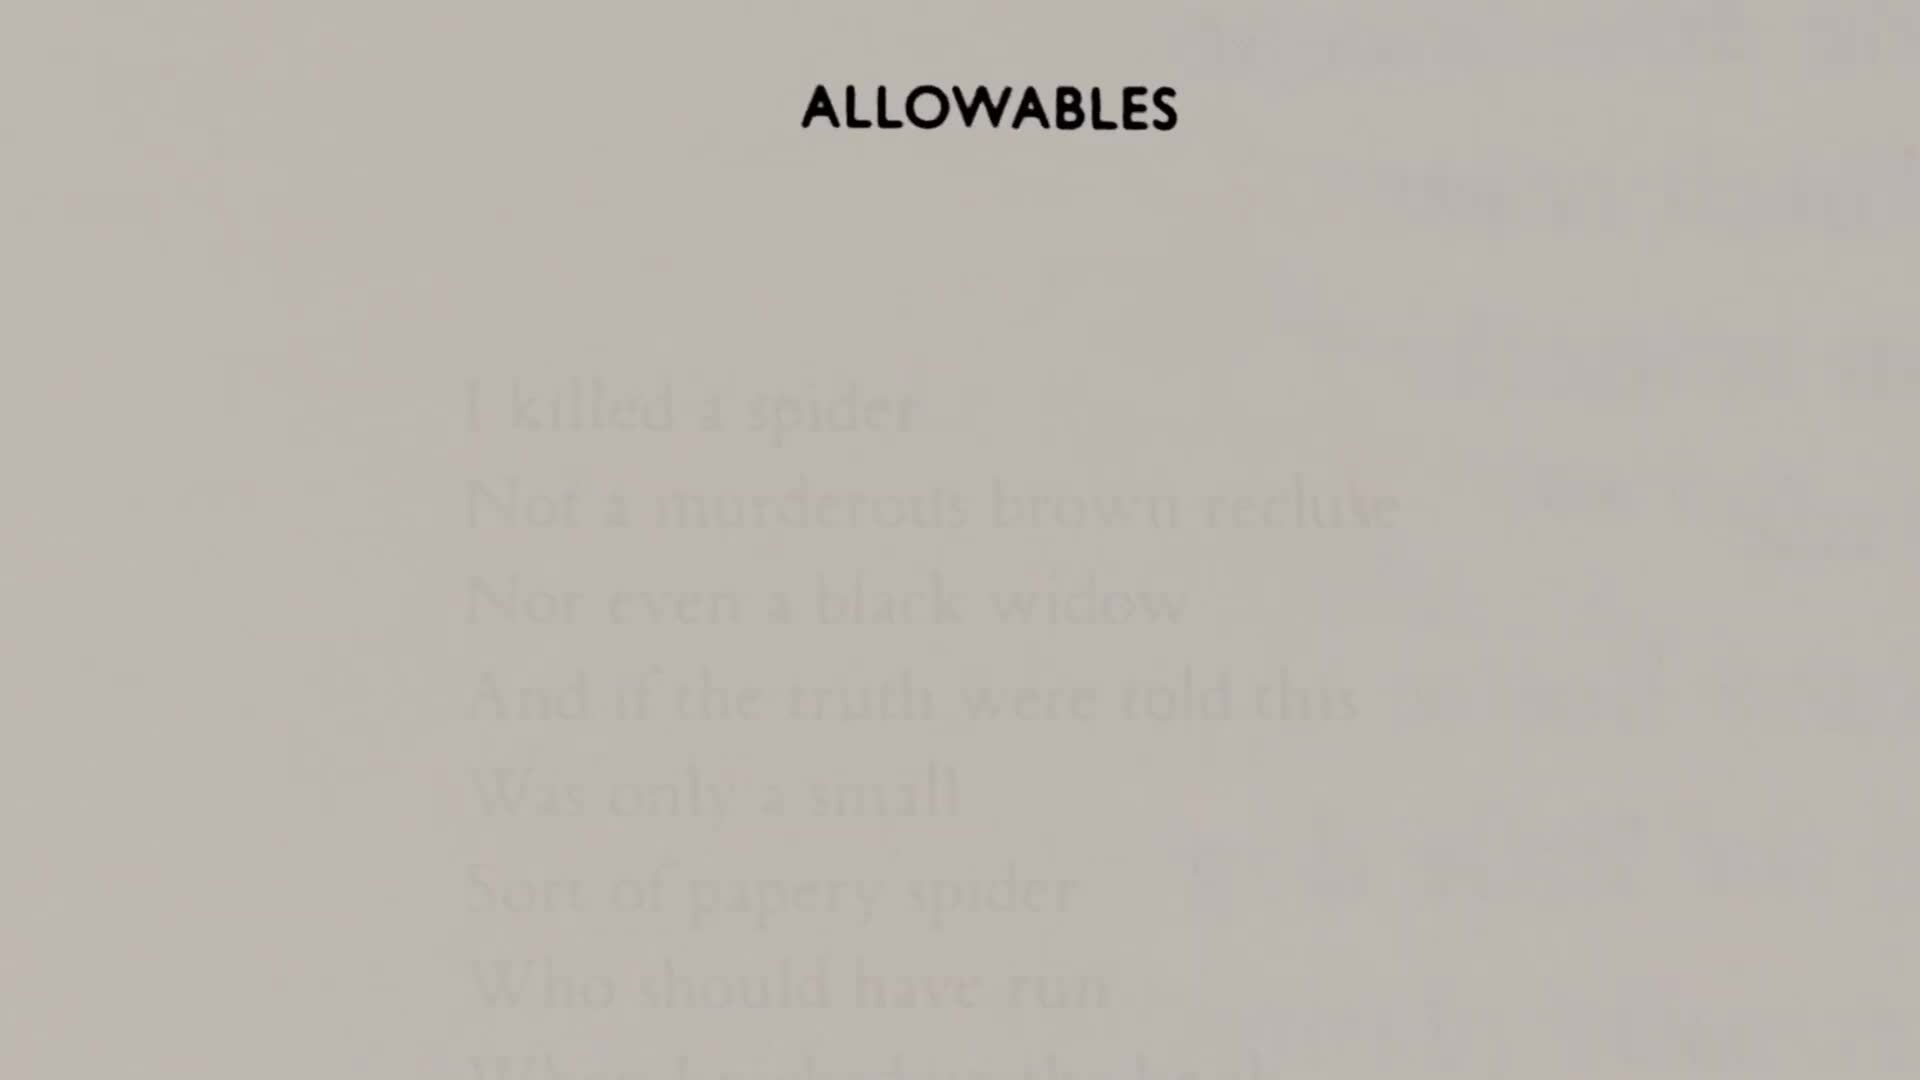 Tabia Yapp reads "Allowables"